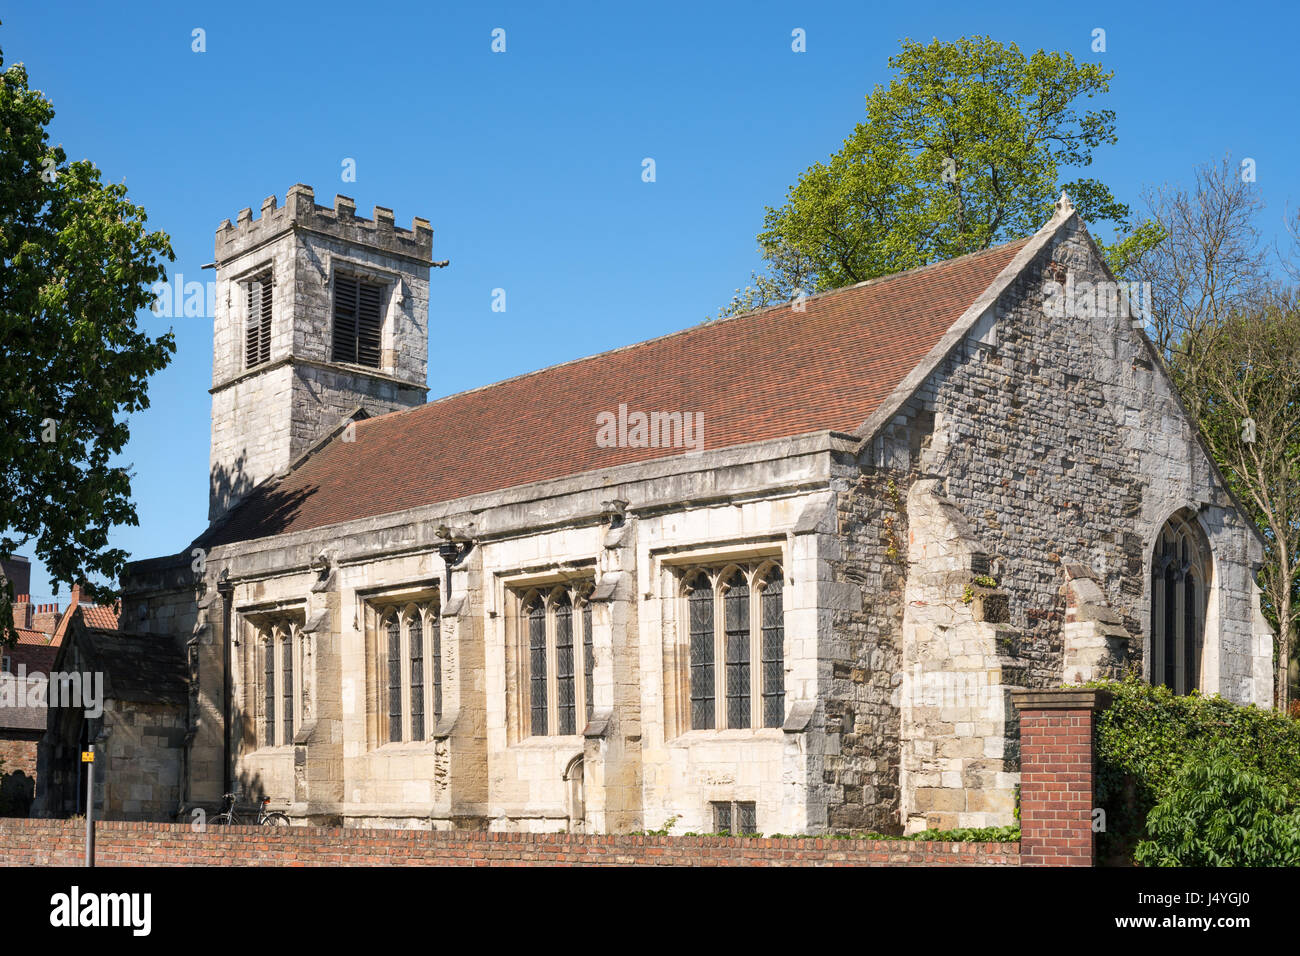 15th century St Cuthbert's church on Peasholme Green, York, North Yorkshire, England, UK Stock Photo